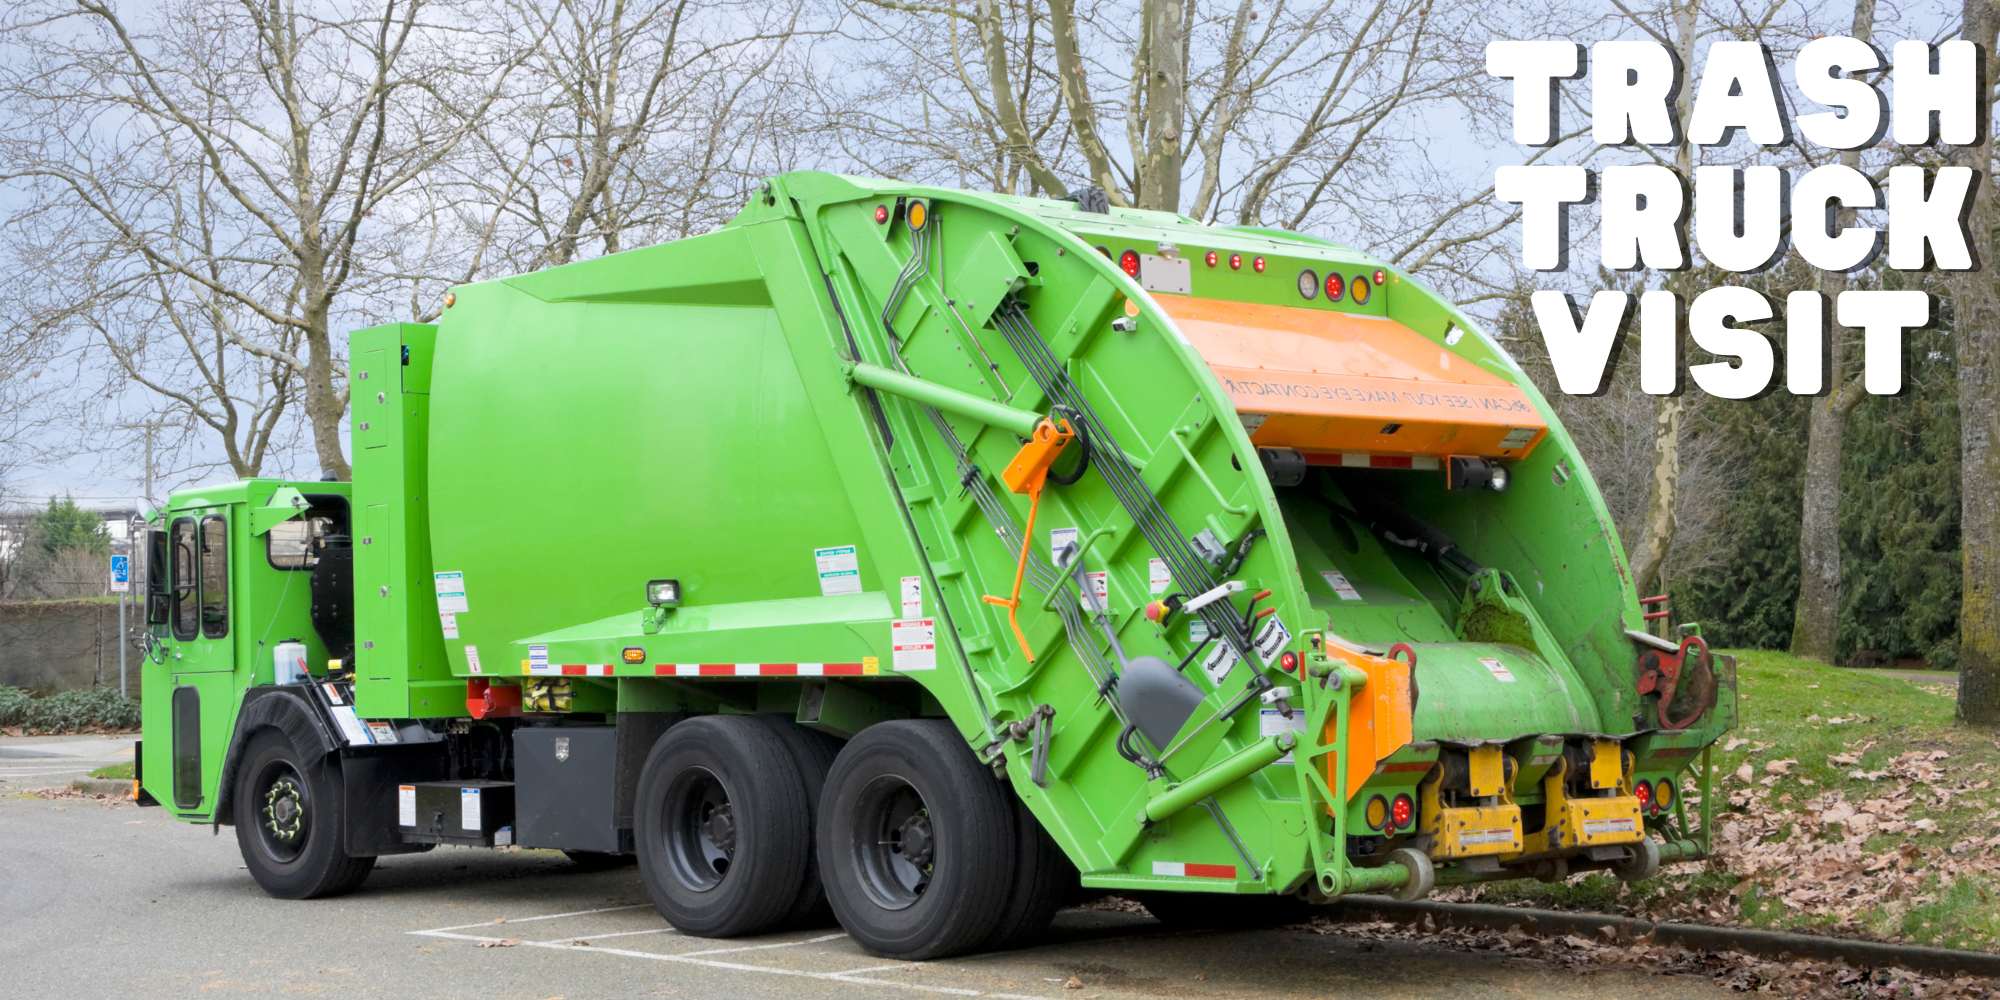 Big green trash truck